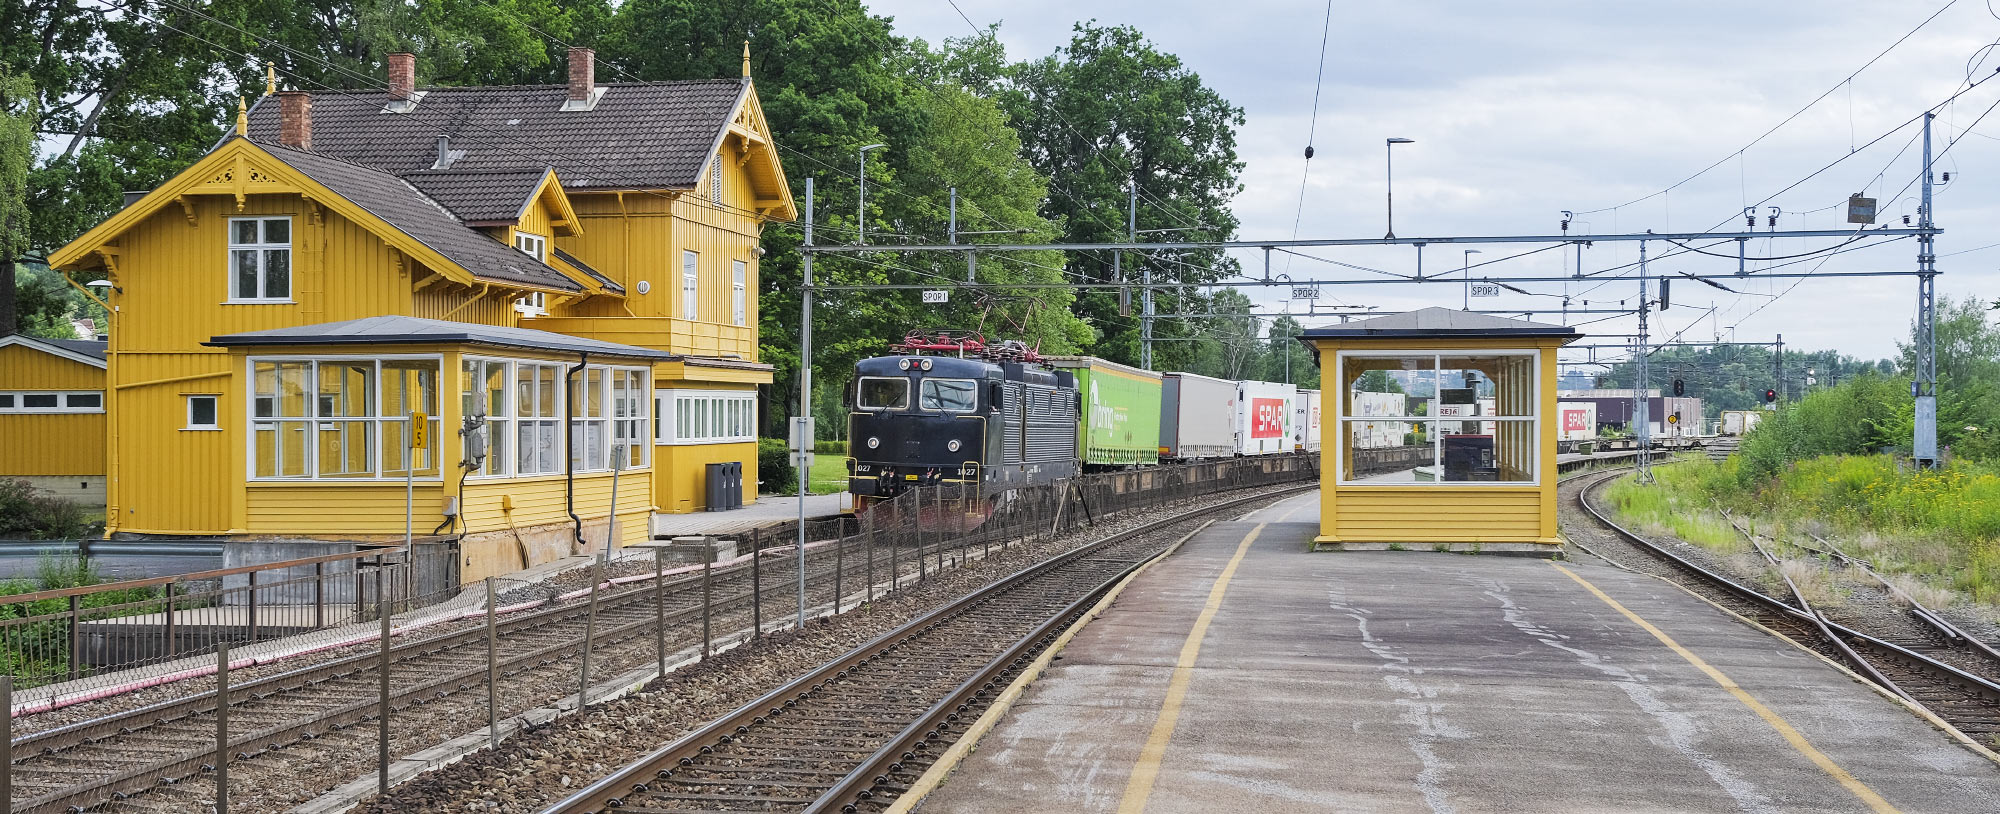 BLS Rail/Onrail Rc3 1027 med godståg Oslo-Åndalsnes i Grorud i Norge 2022